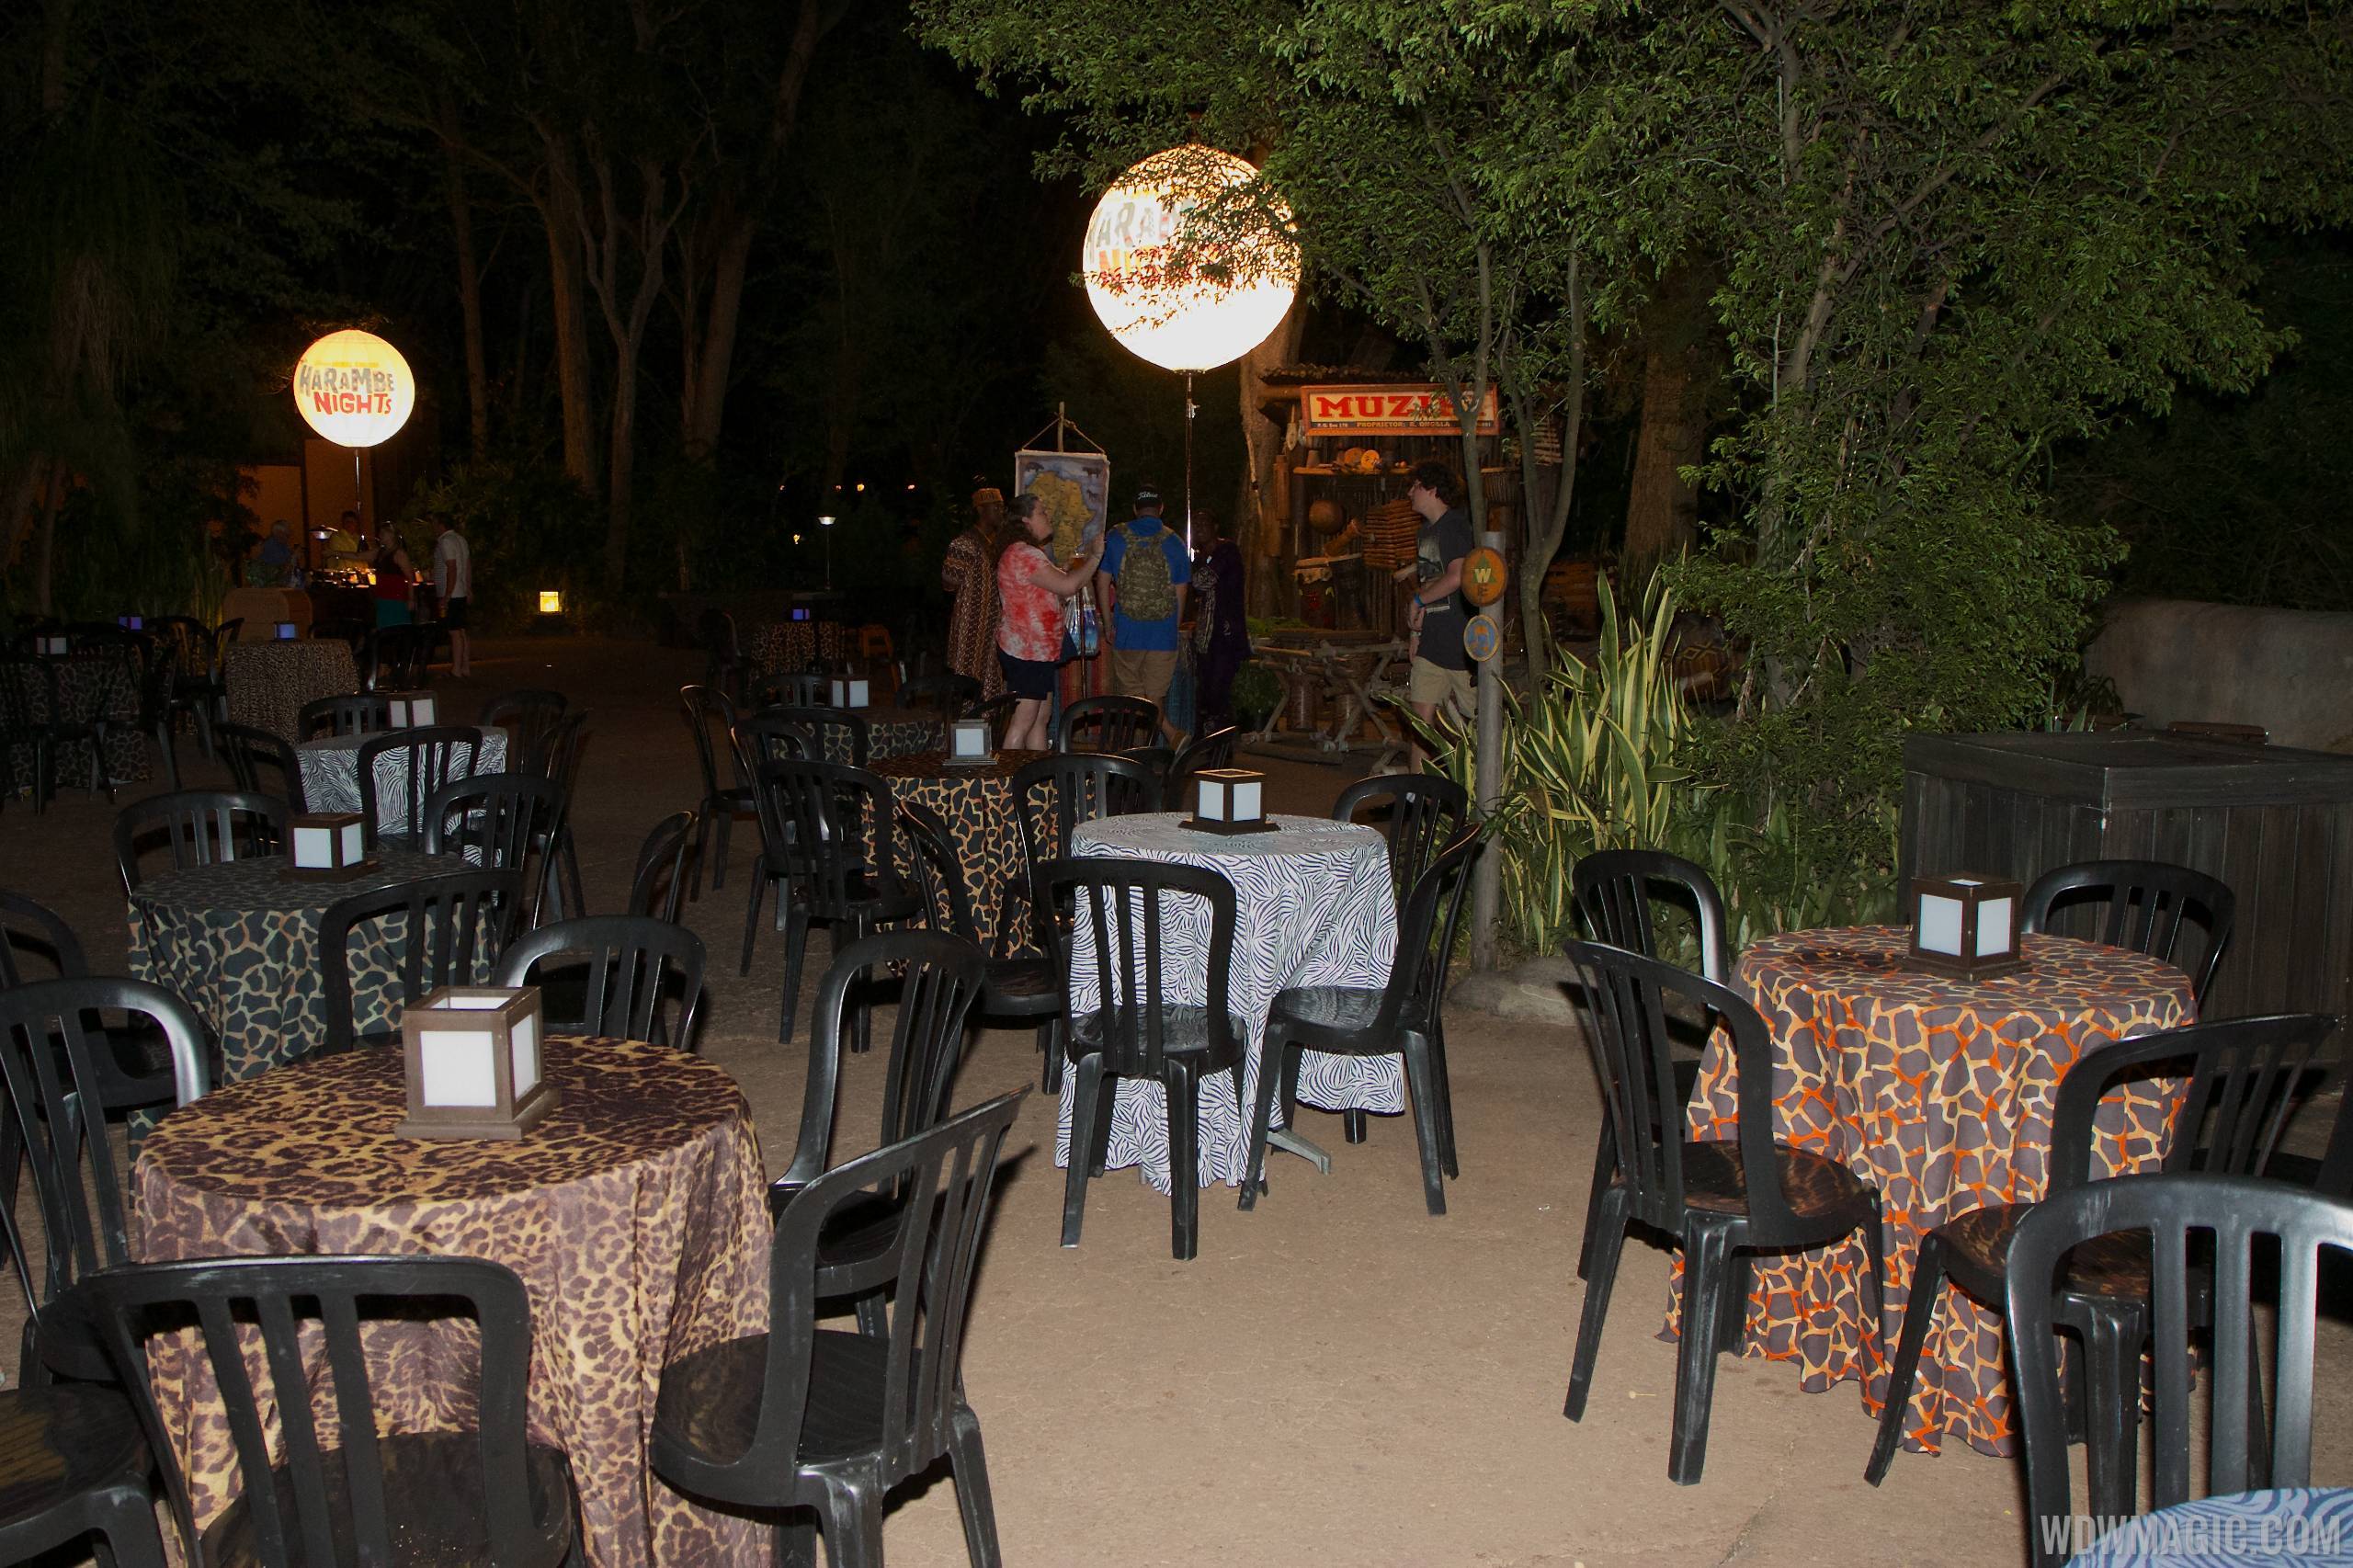 Harambe Nights - Outdoor seating